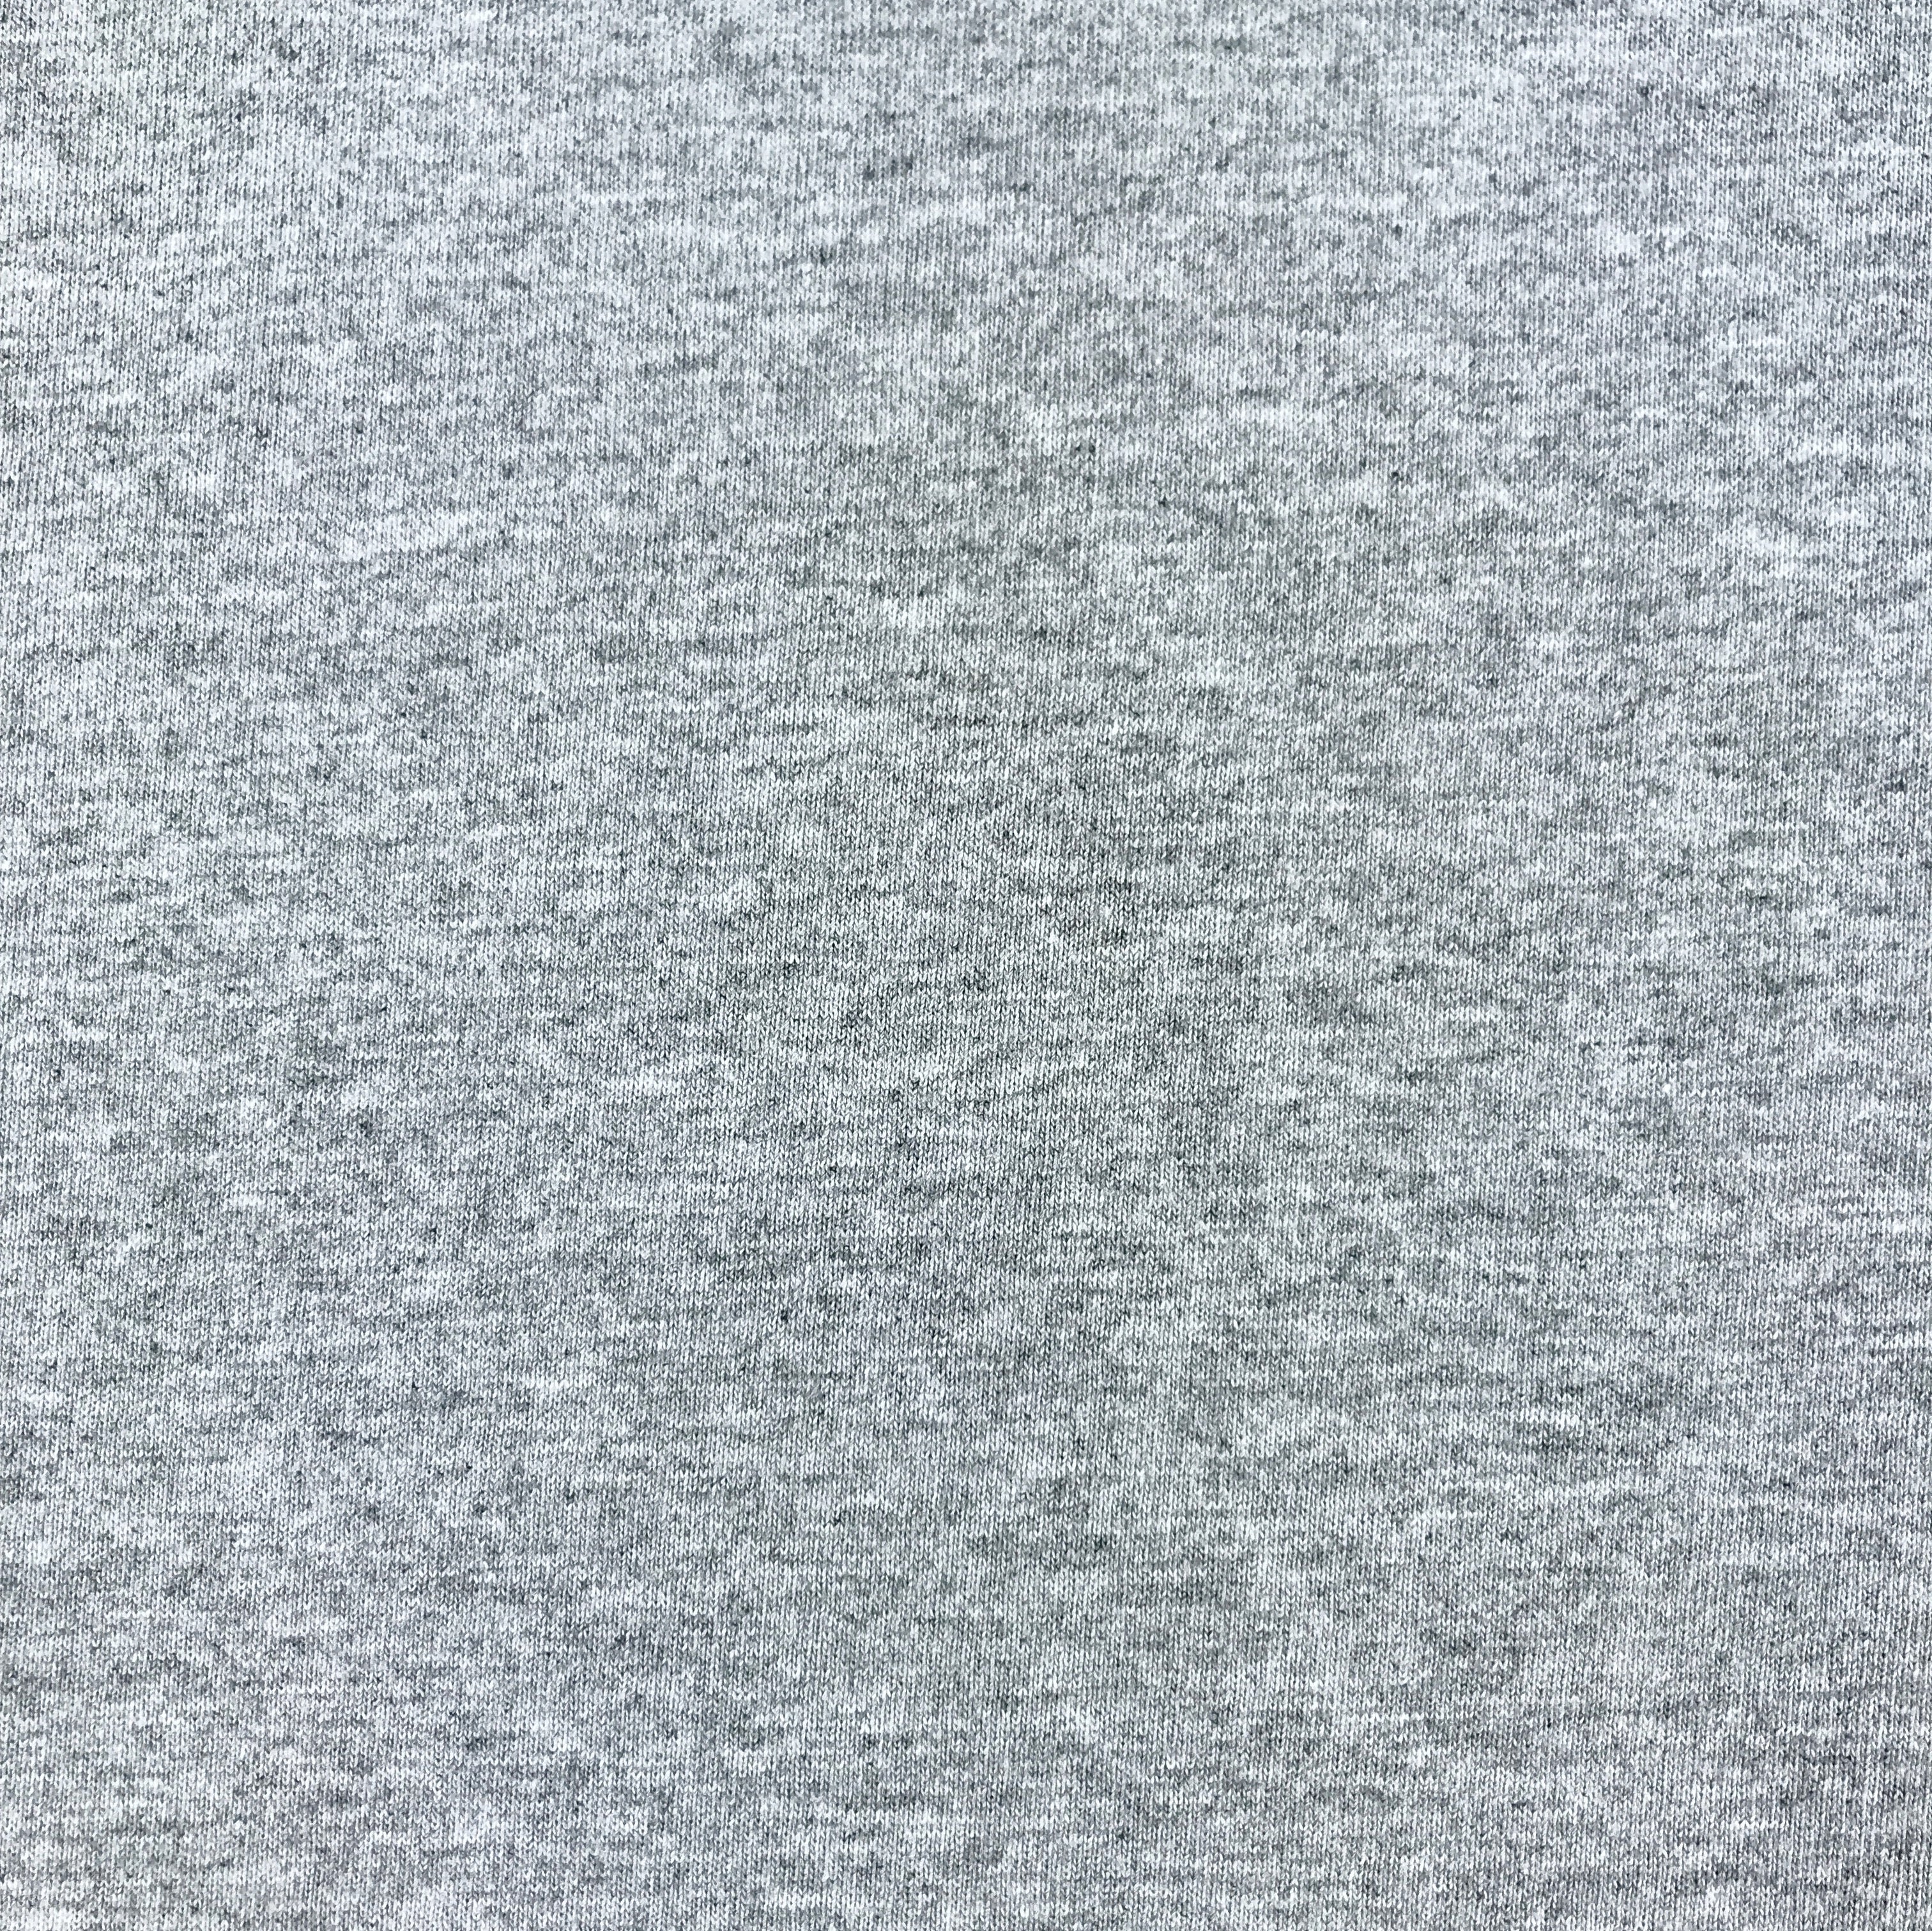 supreme t-shirt box logo 2000 monogram gray– train in vain